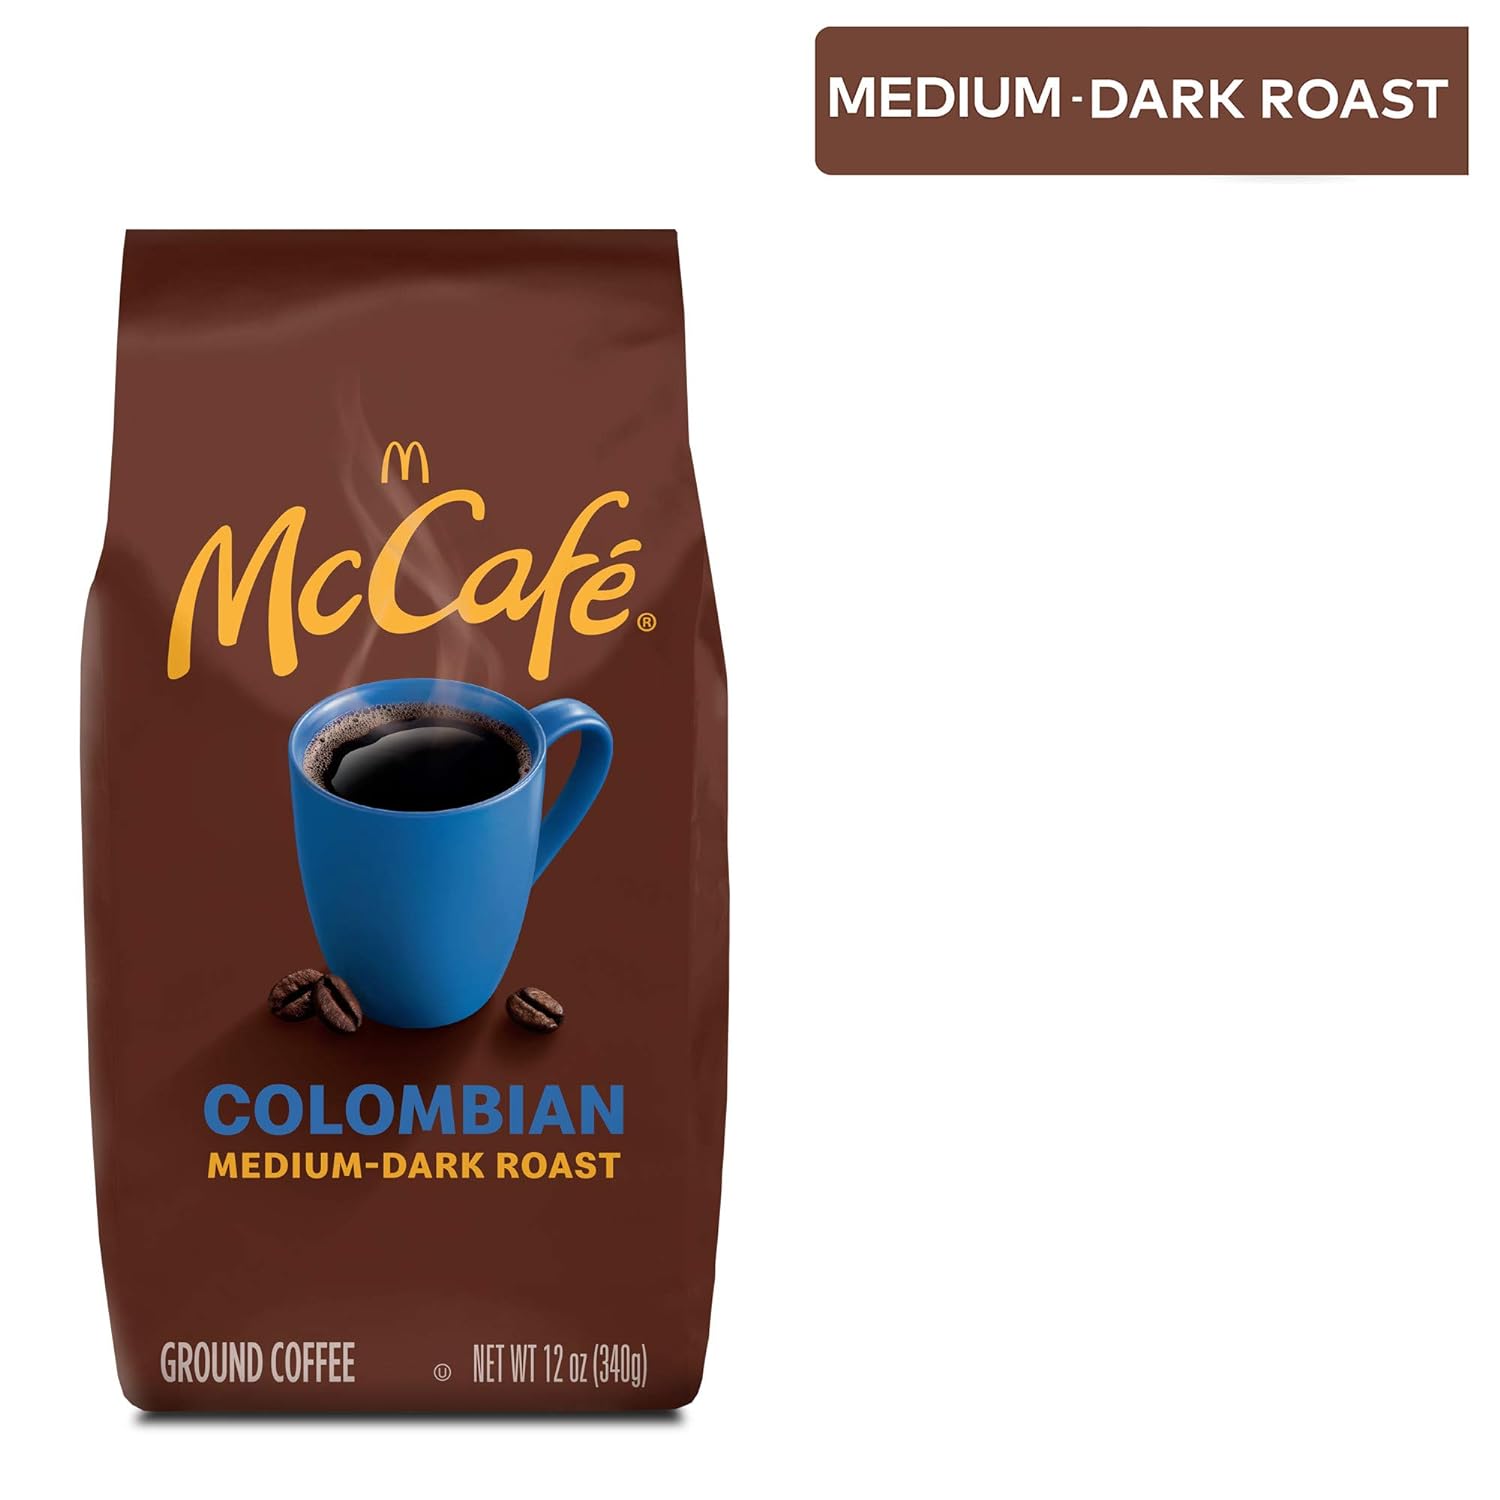 McCafe Colombian, Medium-Dark Roast Ground Coffee, 12 oz Bag : Grocery & Gourmet Food